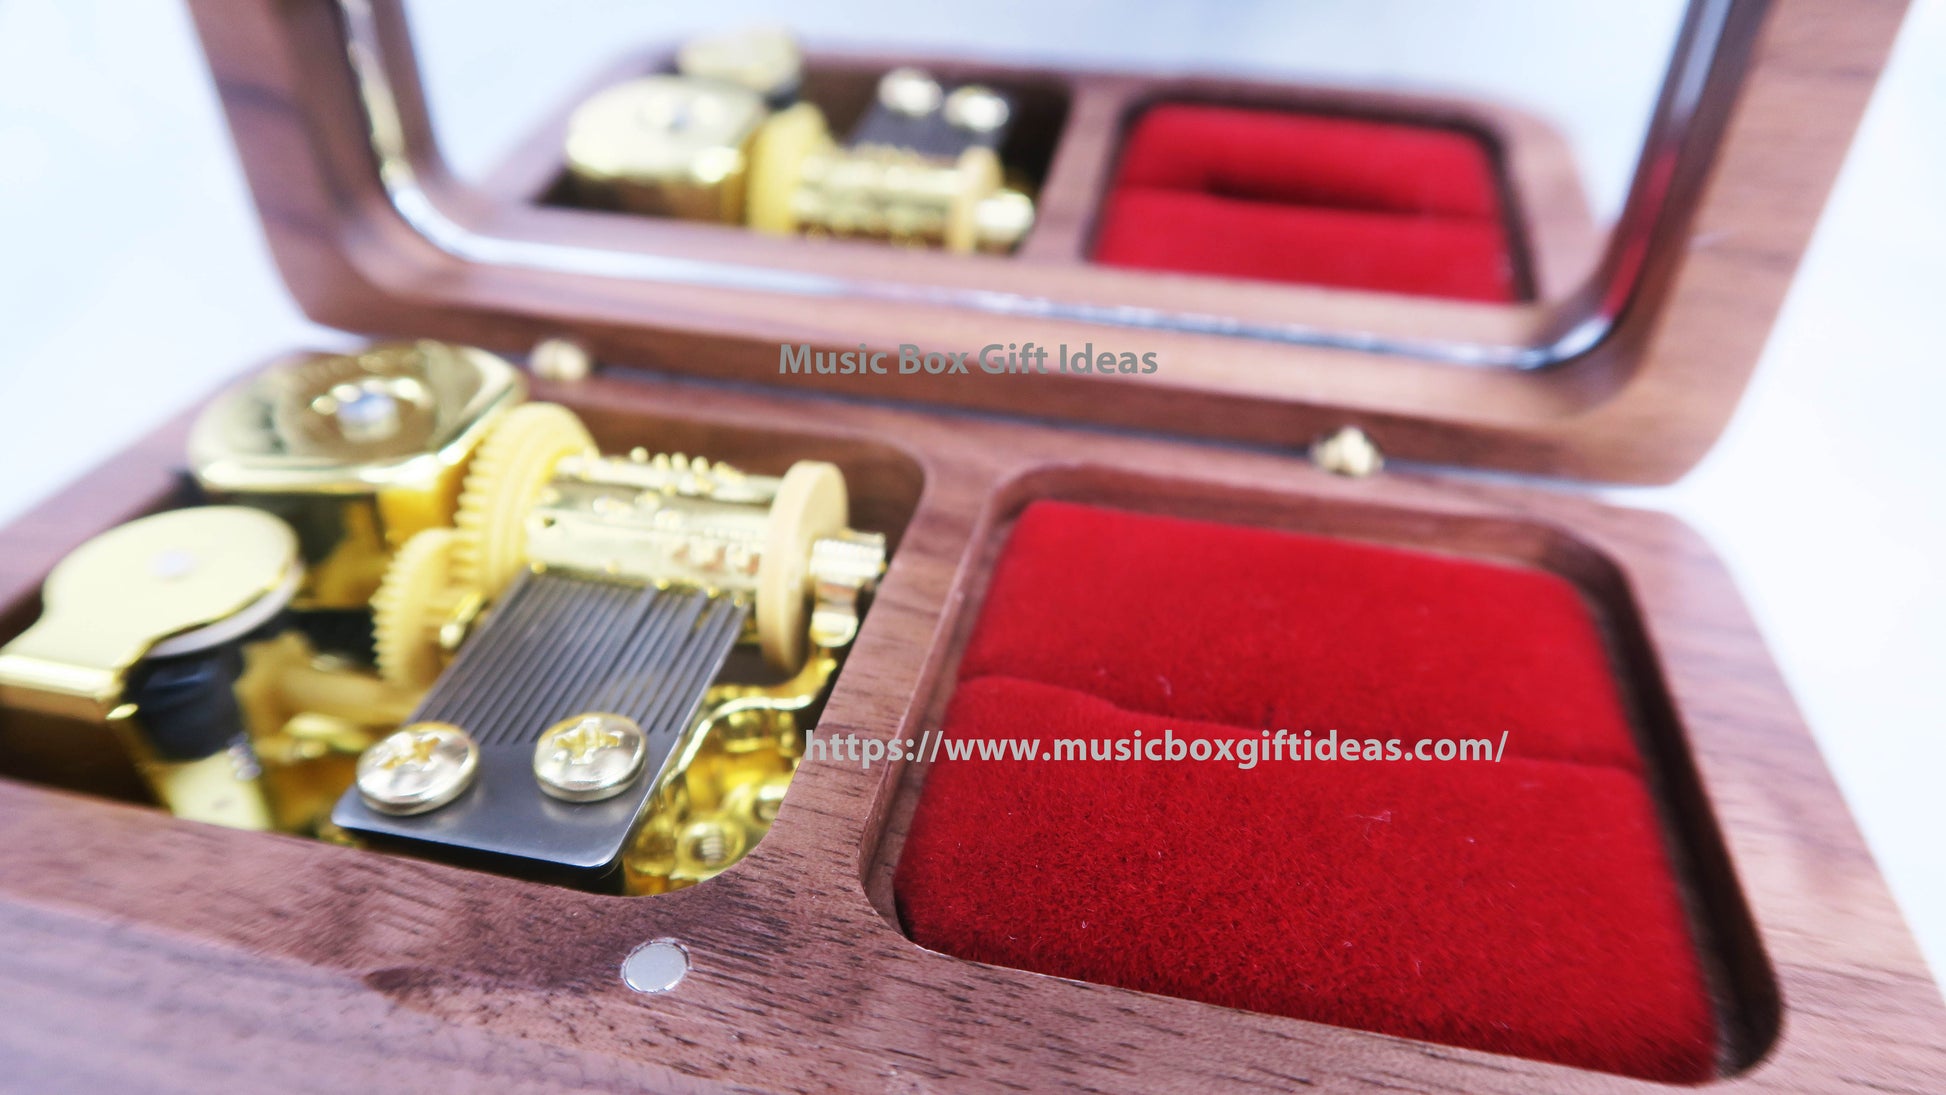 Disney Aladdin A Whole New World 18-Note Jewelry Music Box Gift (Wooden Clockwork) - Music Box Gift Ideas